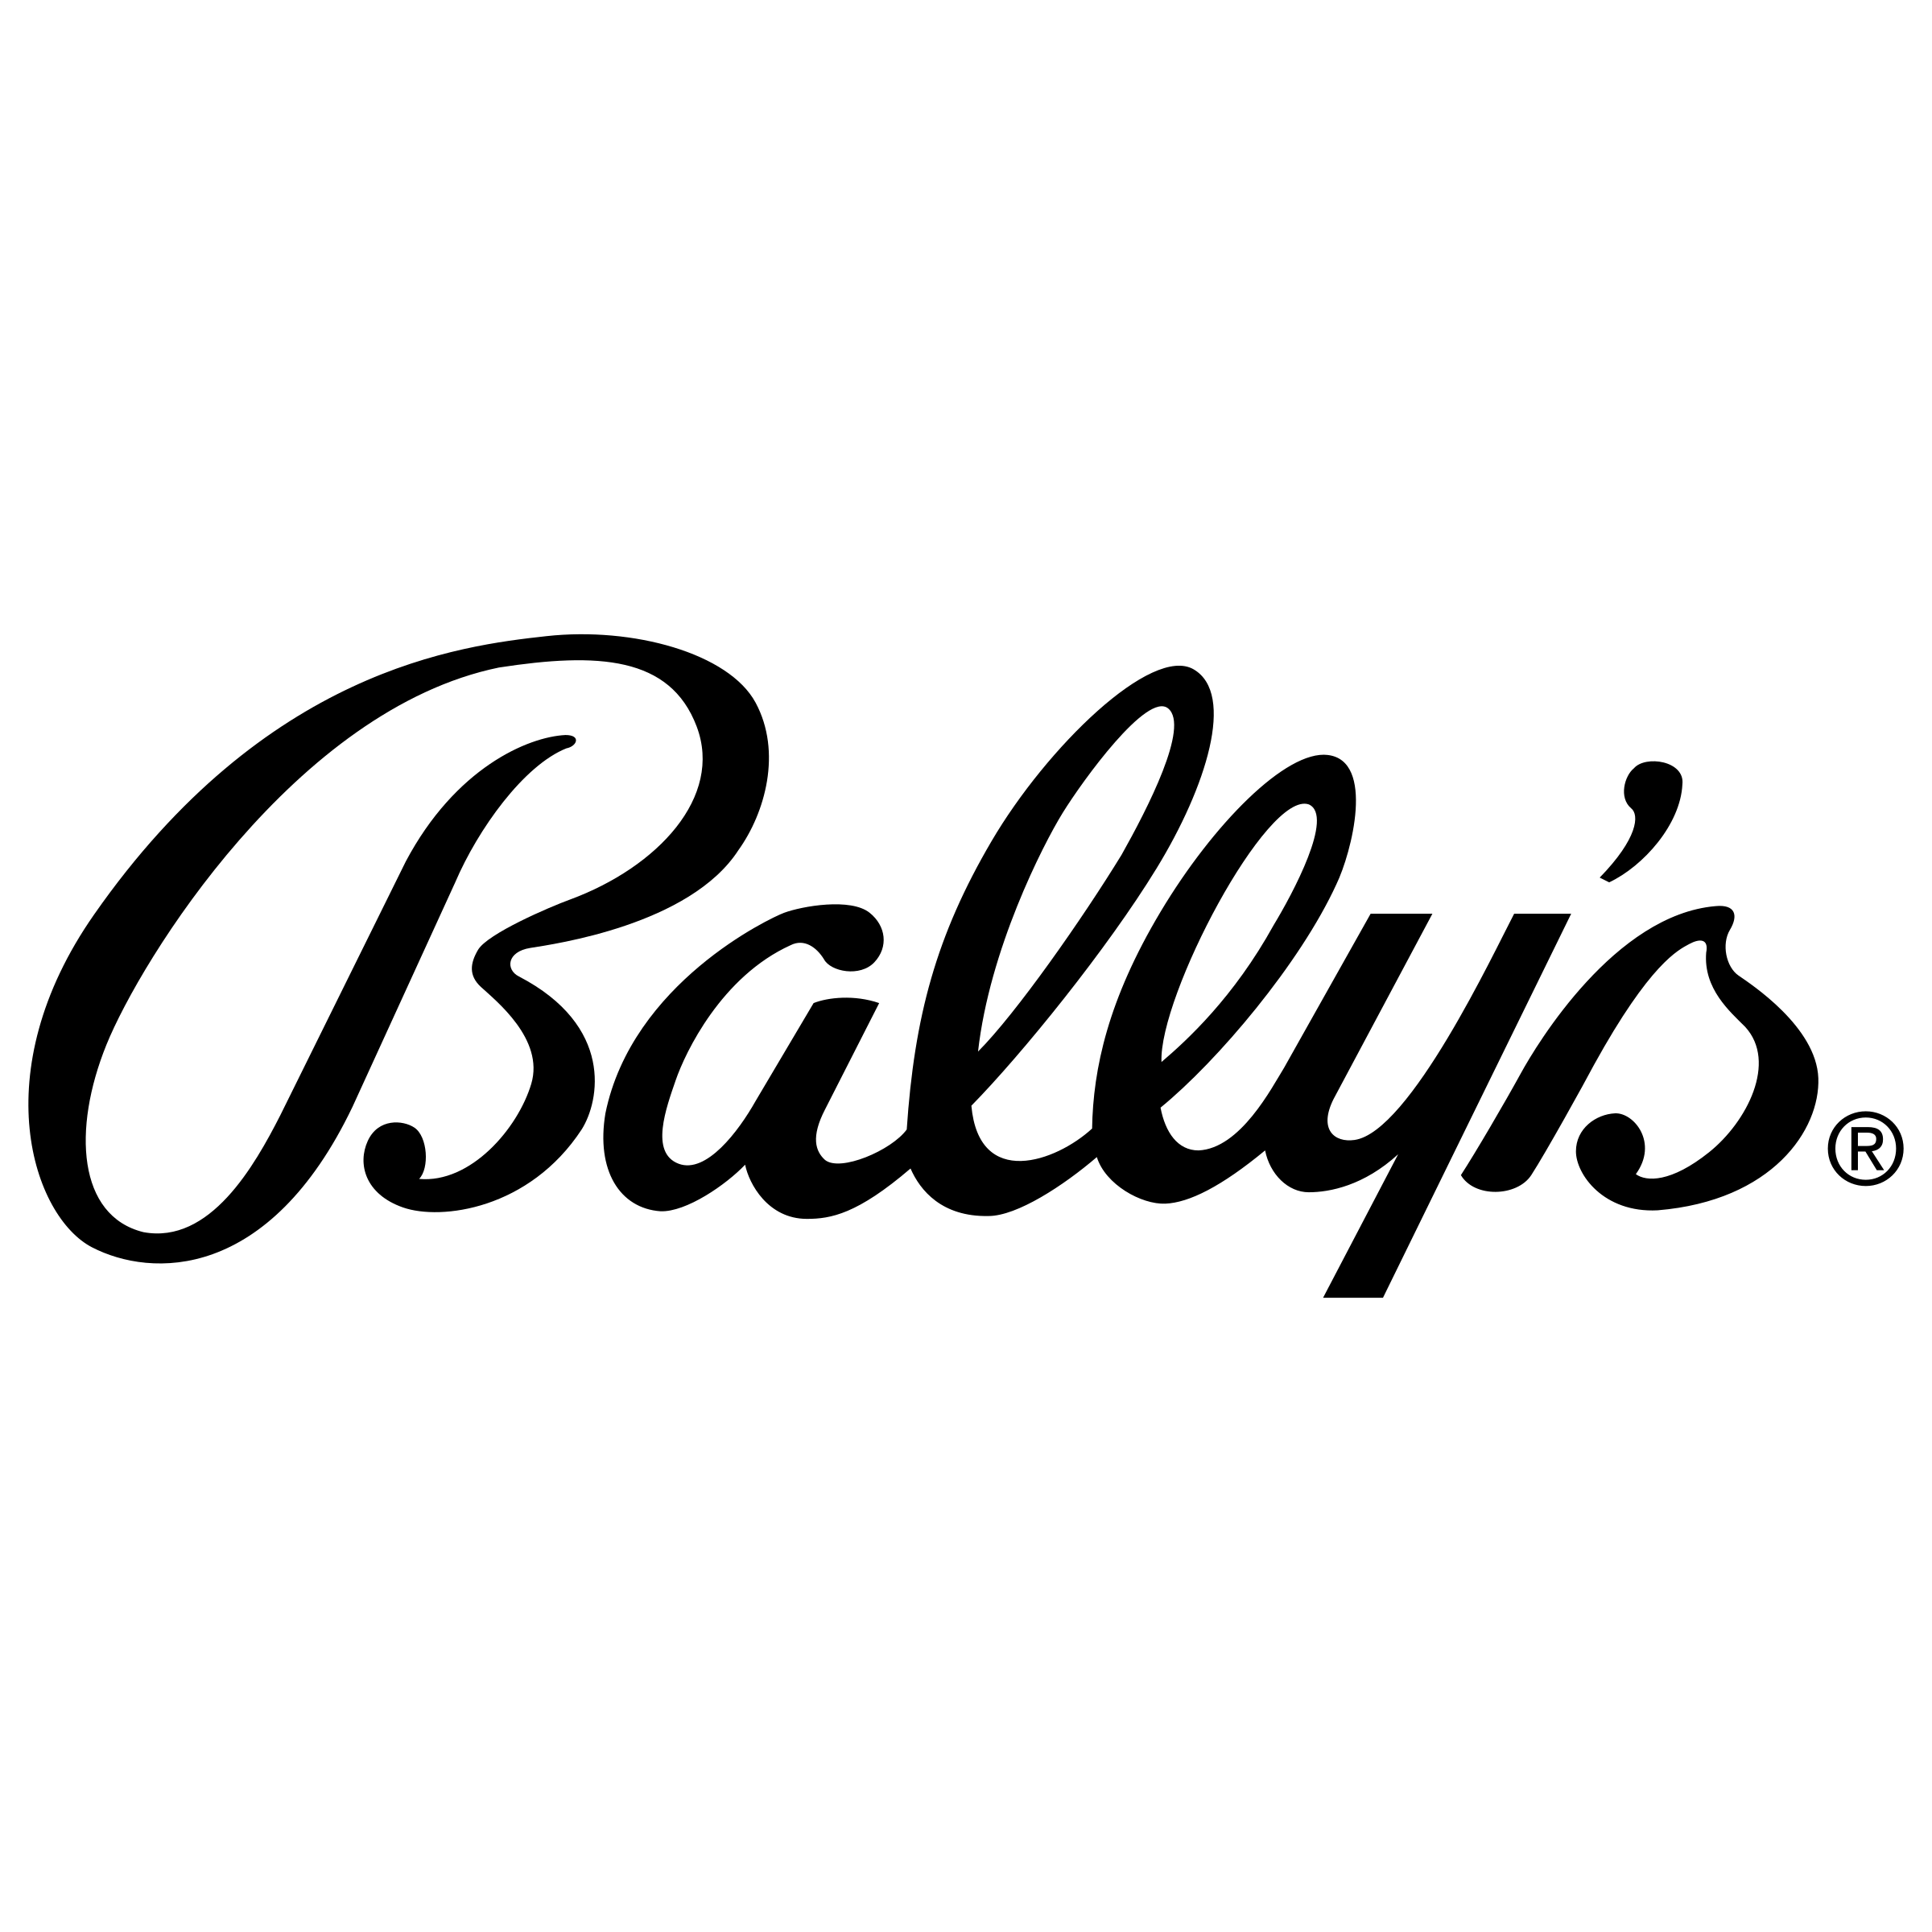 Bally's Logo - Bally's Logo PNG Transparent & SVG Vector - Freebie Supply